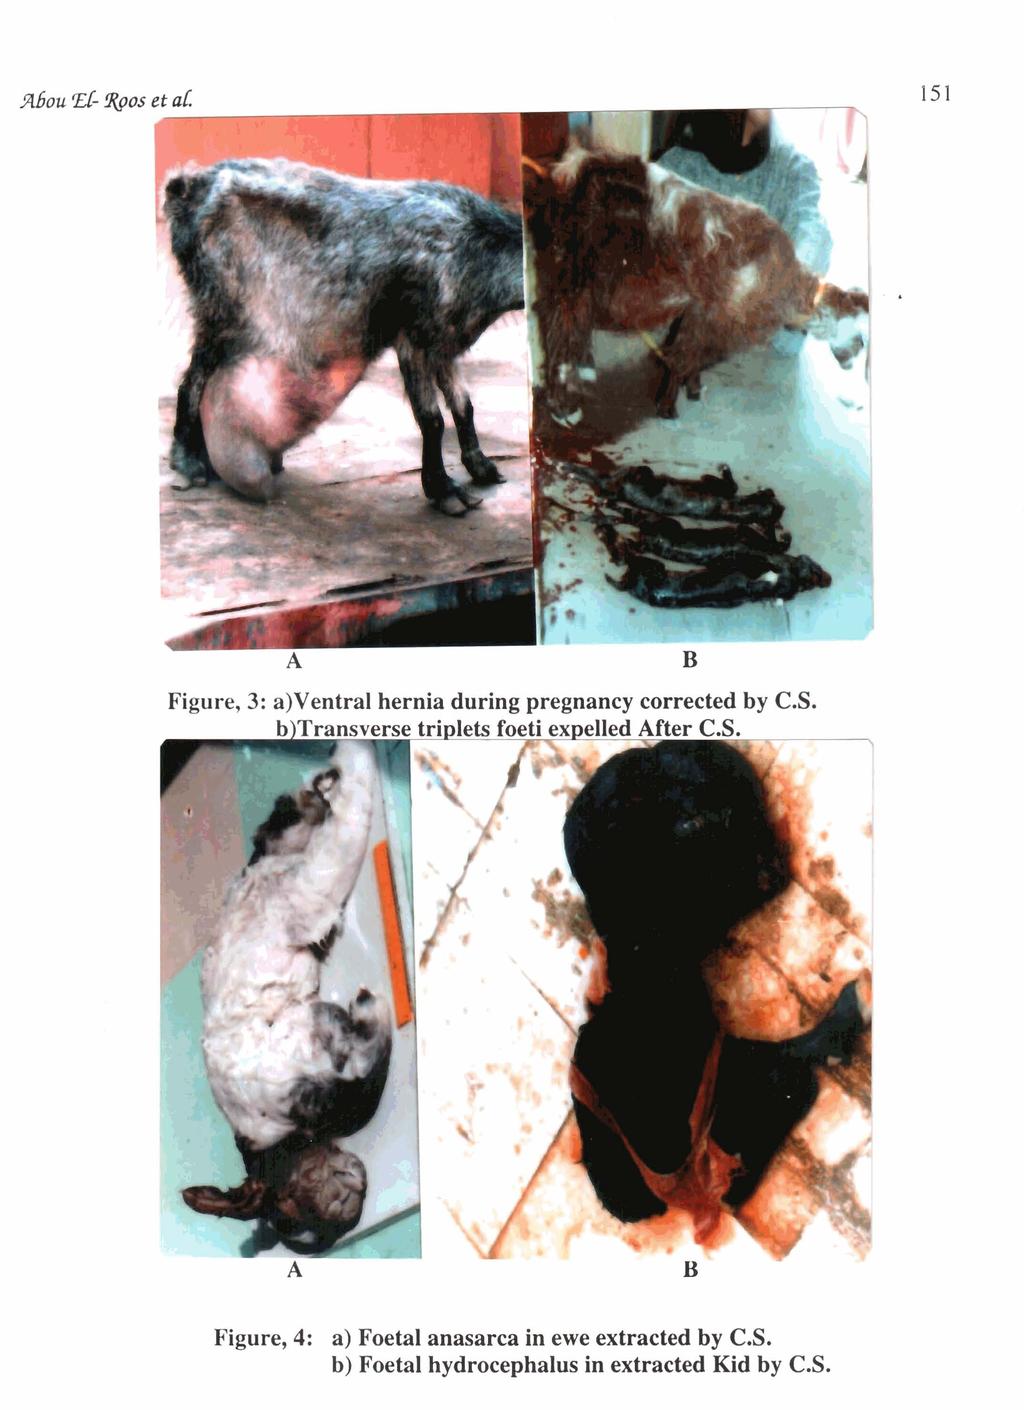 Figure, 4: a) Foetal anasarca in ewe extracted